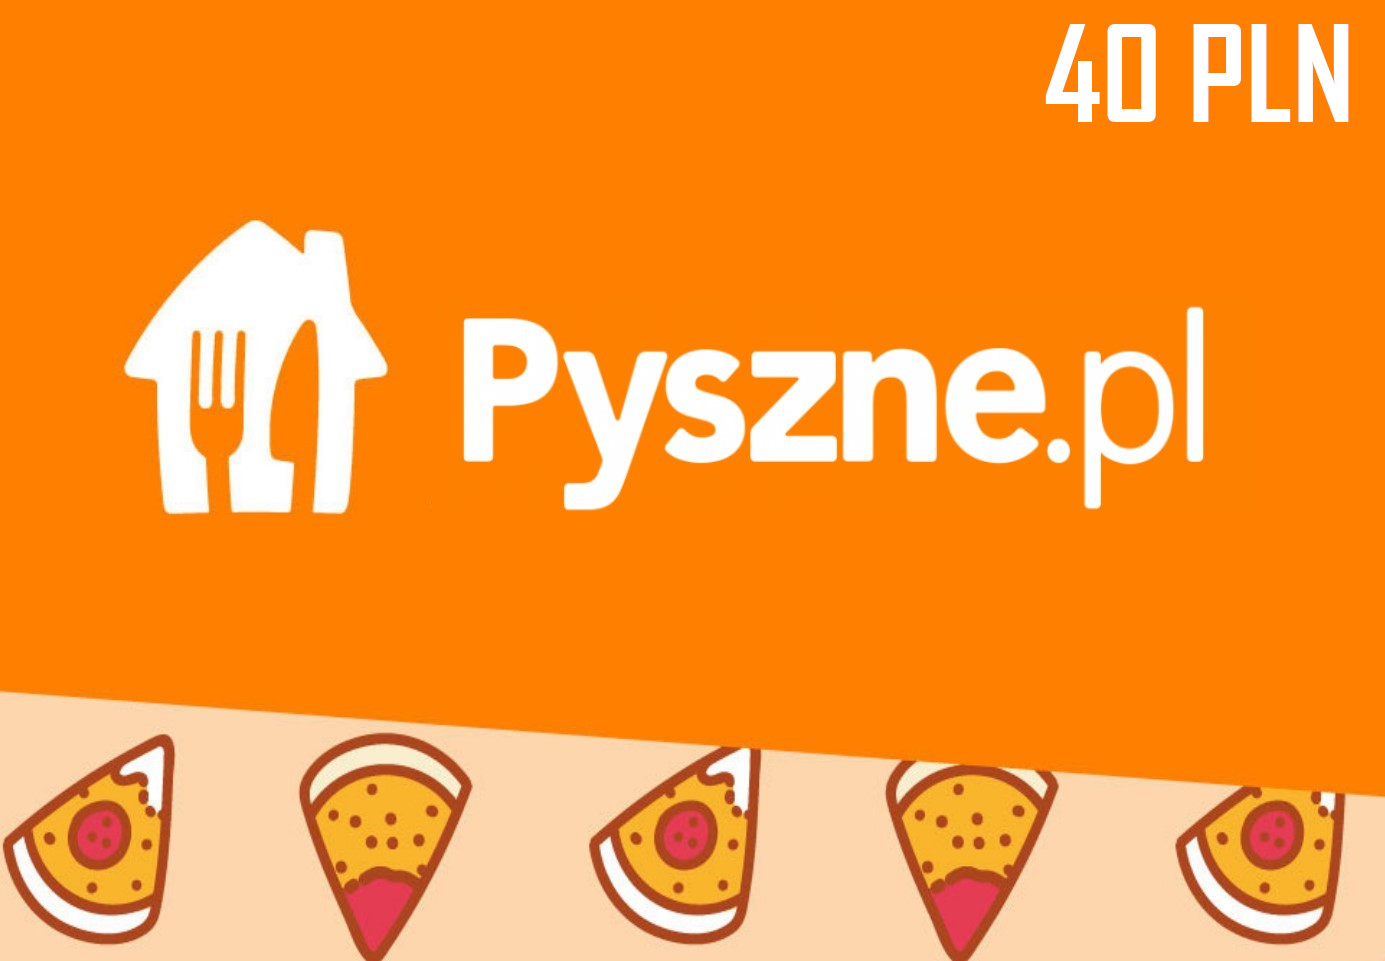 (11.82$) Pyszne.pl 40 PLN Gift Card PL